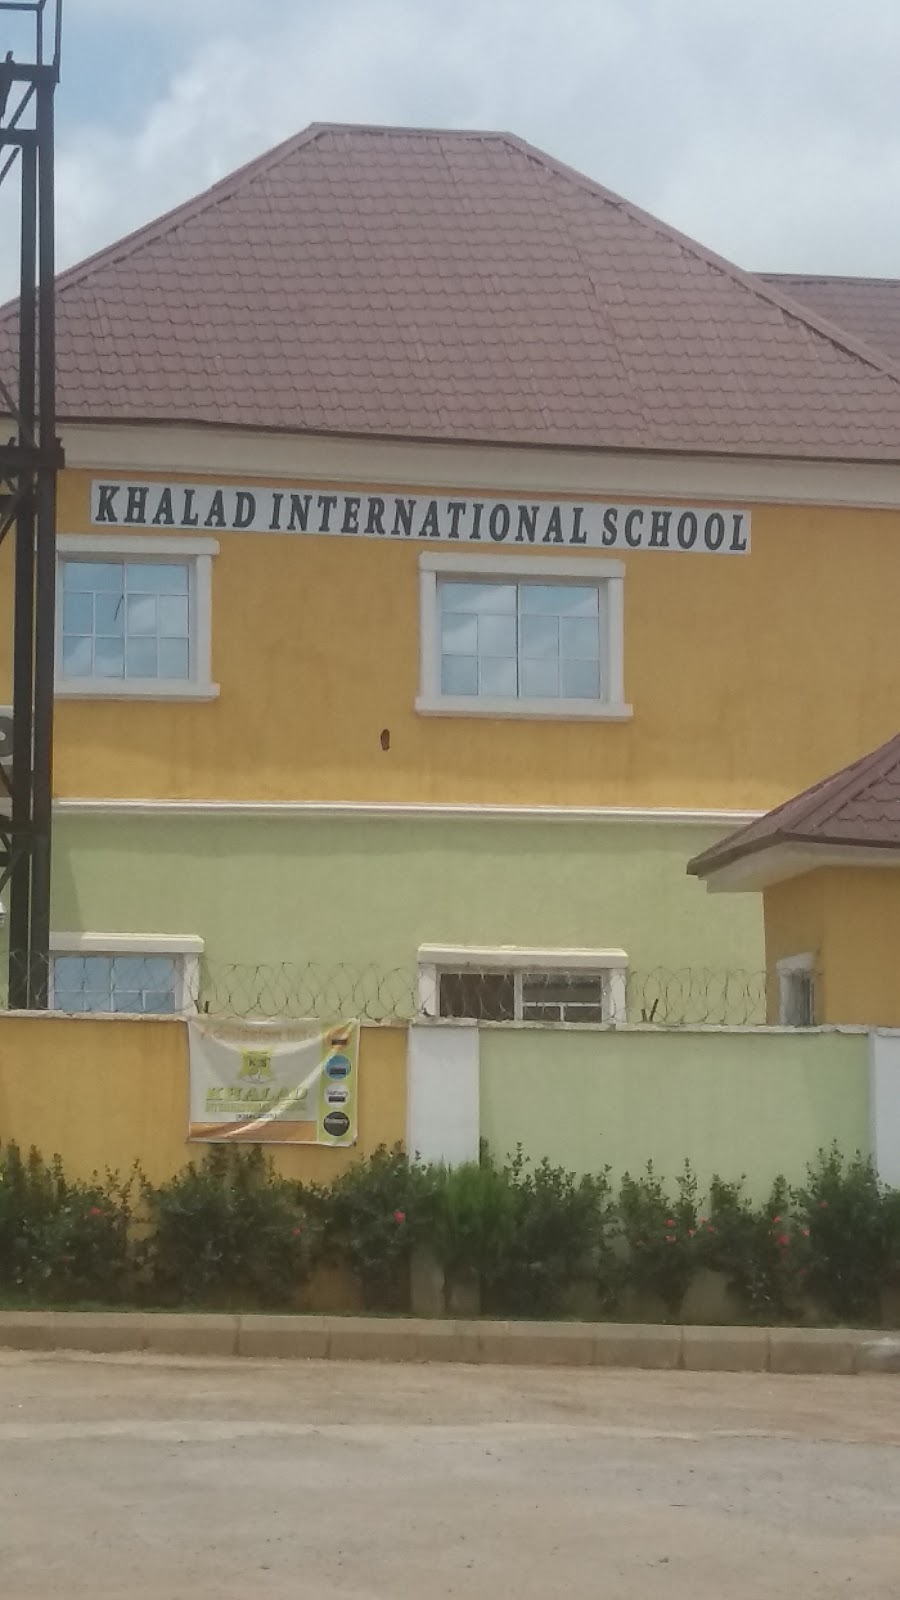 Khalad International School